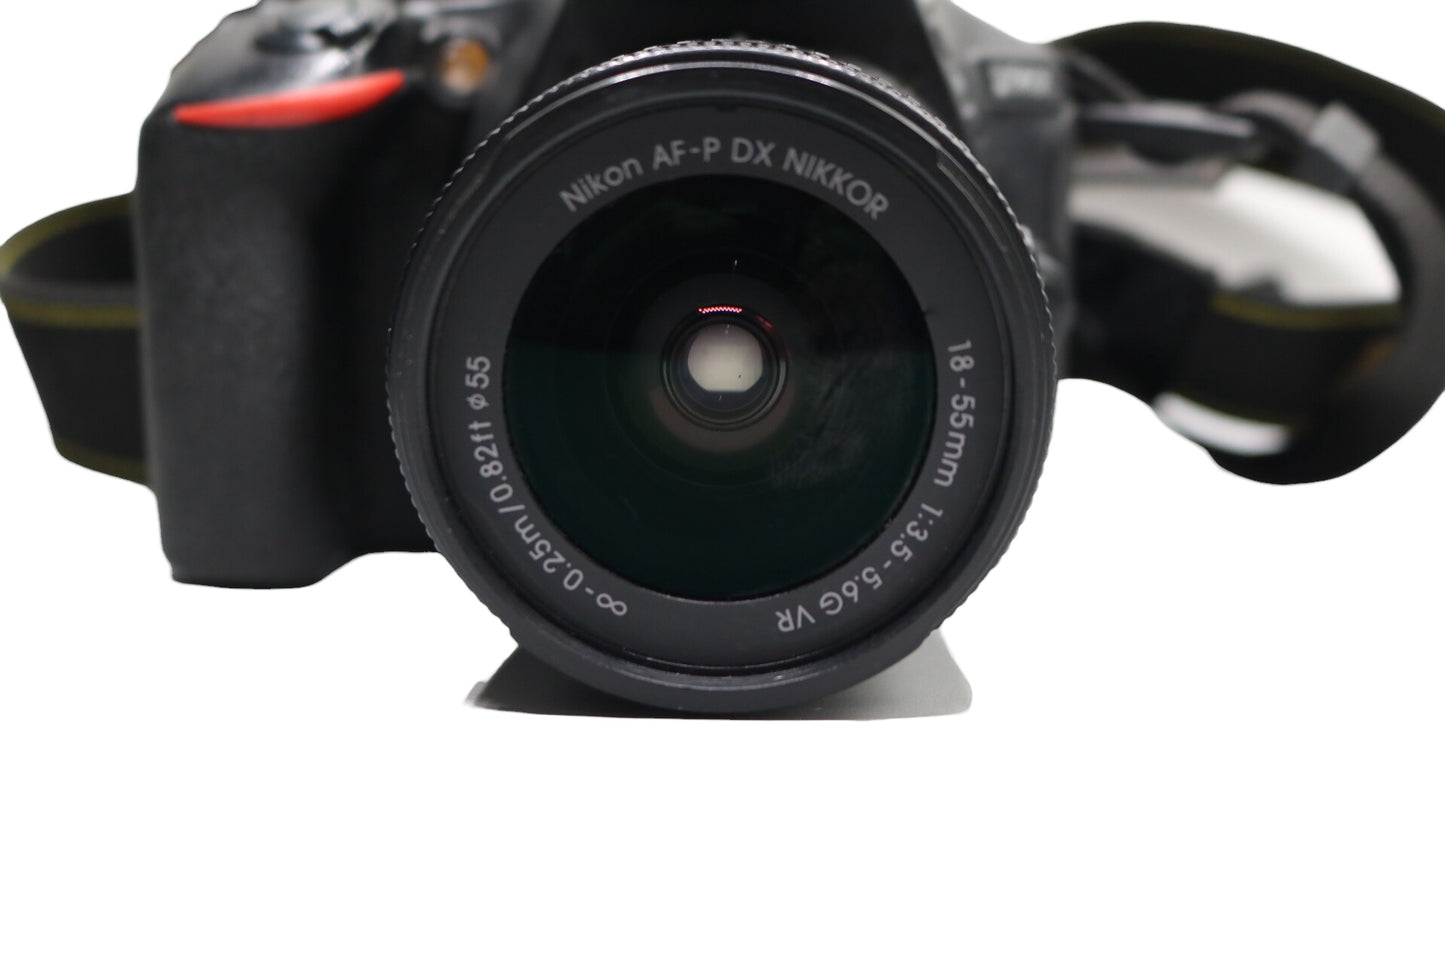 Nikon D5600 N1538 Digital Camera with Nikon 18-55mm Lens and SB-500 Flash